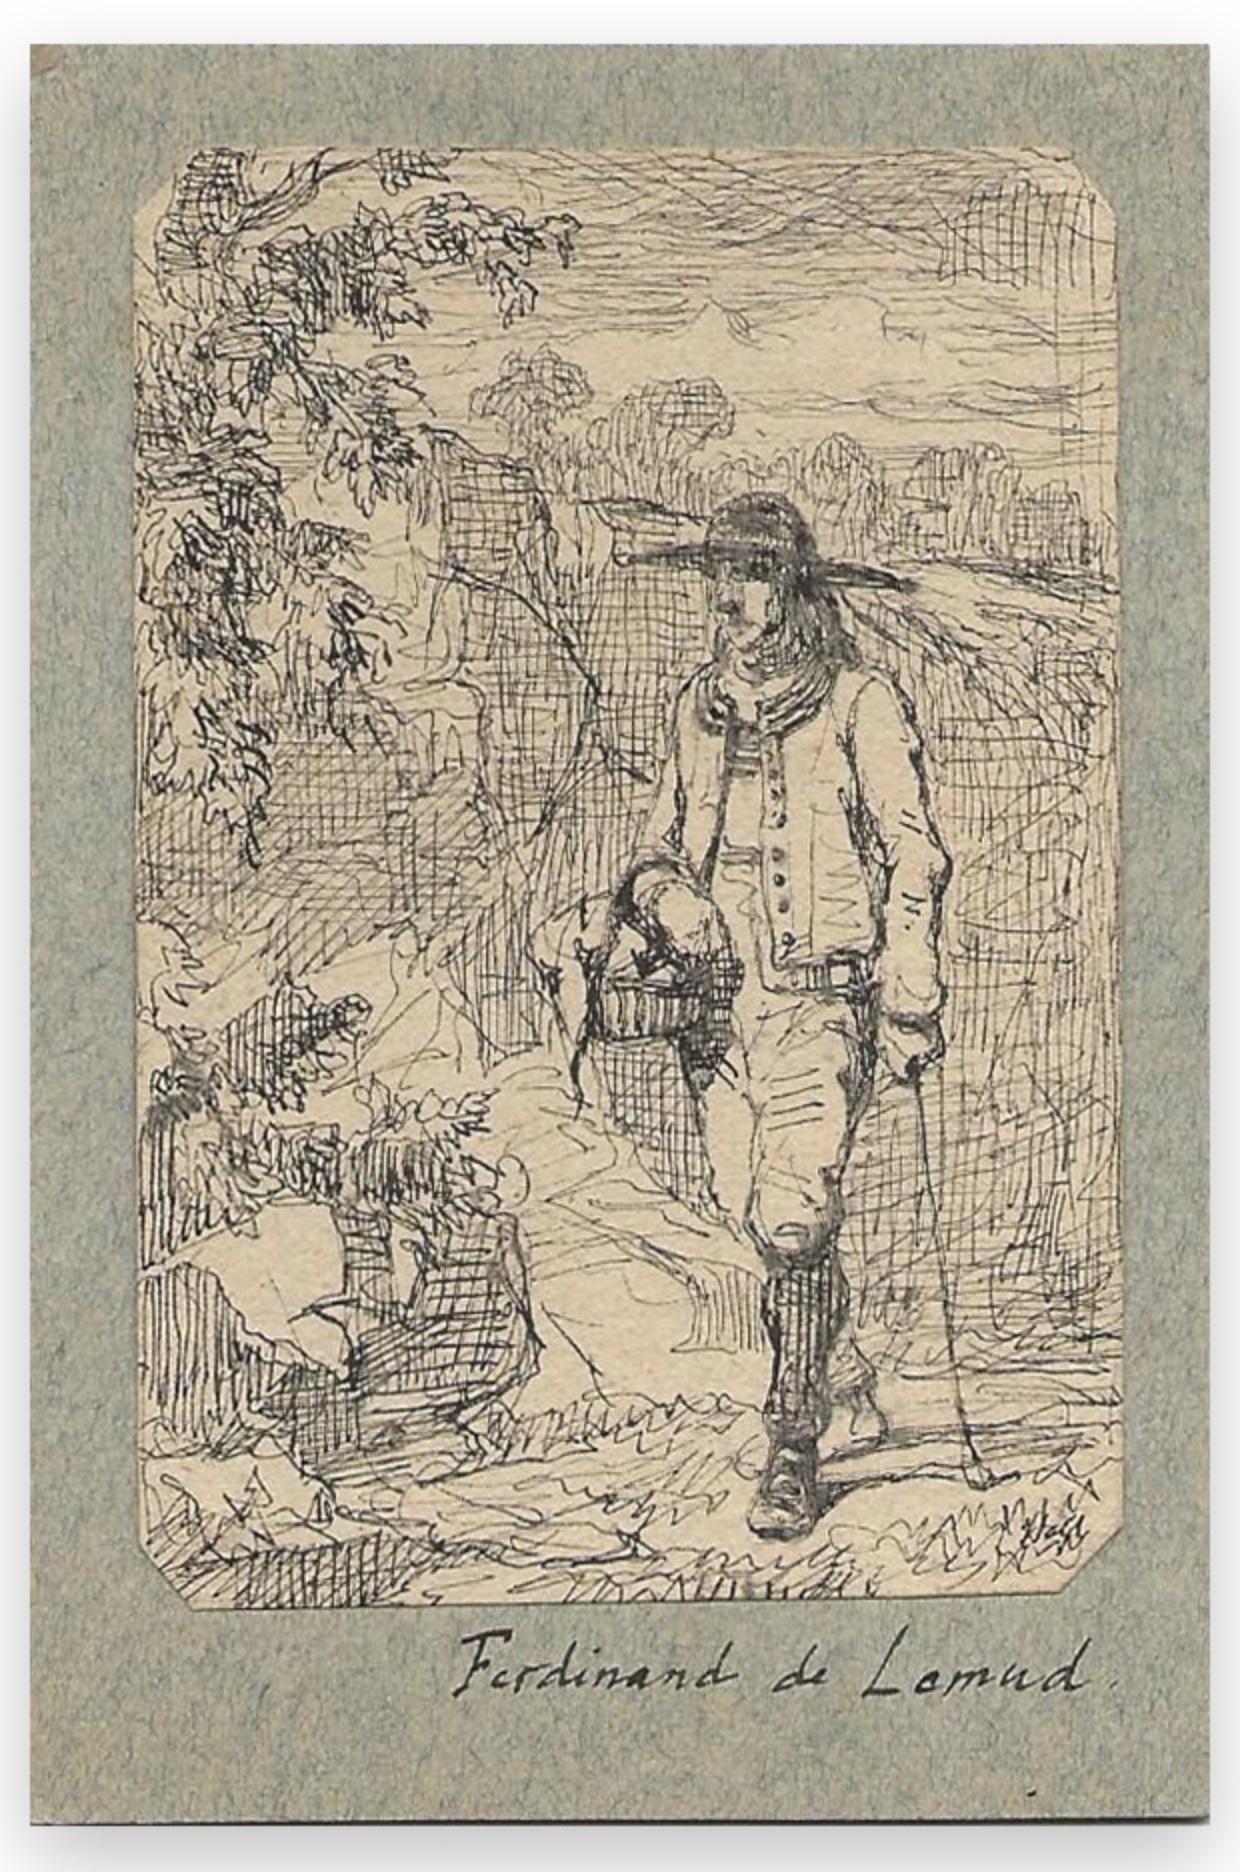 Man with a Basket - Original Drawing by Ferdinand Lemud - 19th Century